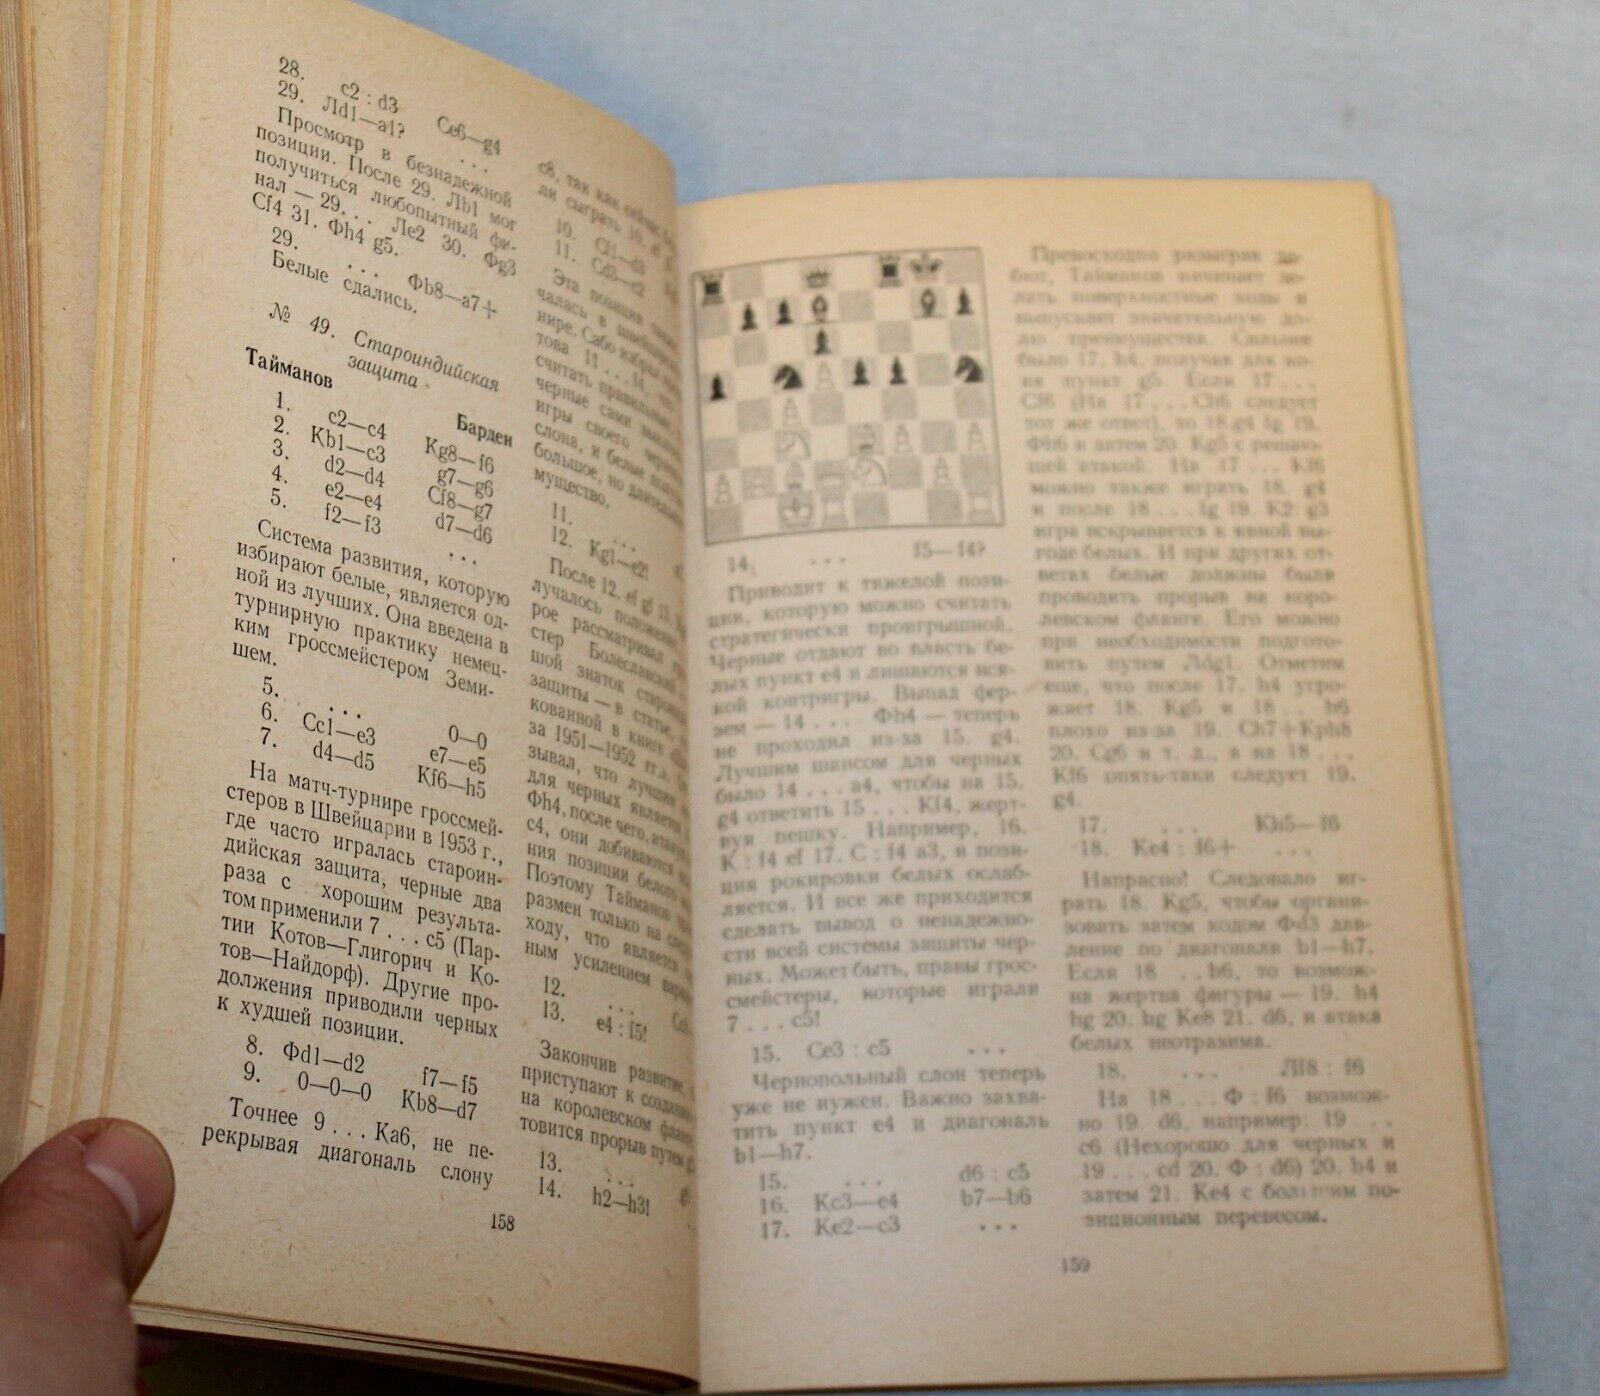 11032.Chess Book. Bondarevsky. Soviet chess players in the USA, England, Sweden 1955